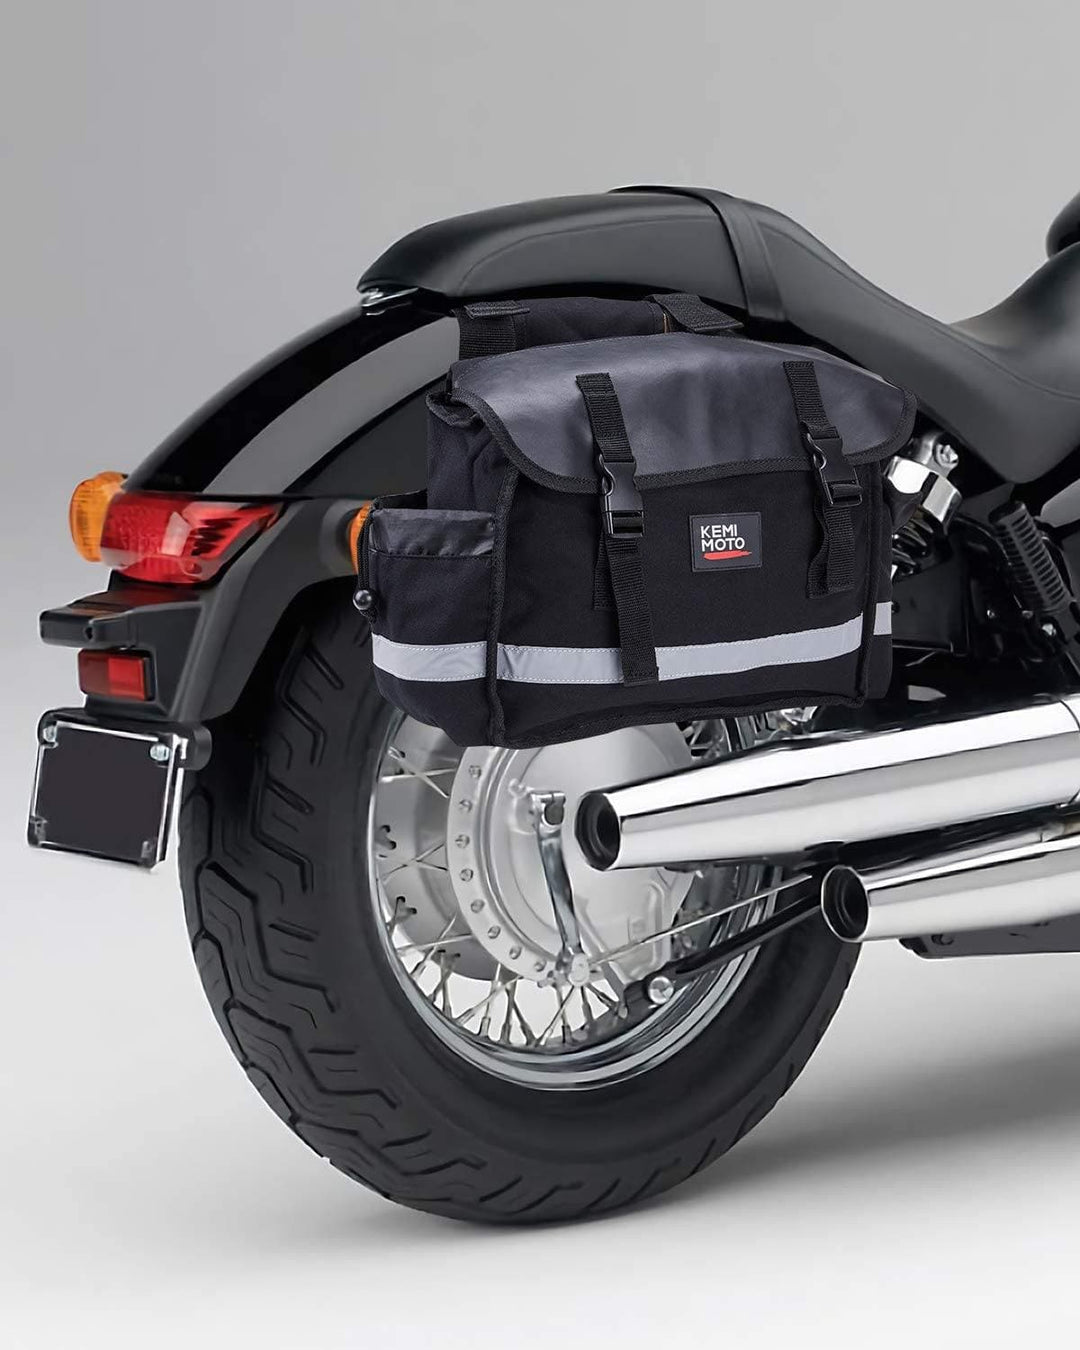 KEMIMOTO Motorcycle Saddlebags, Motorcycle Luggage Bag, Waterproof